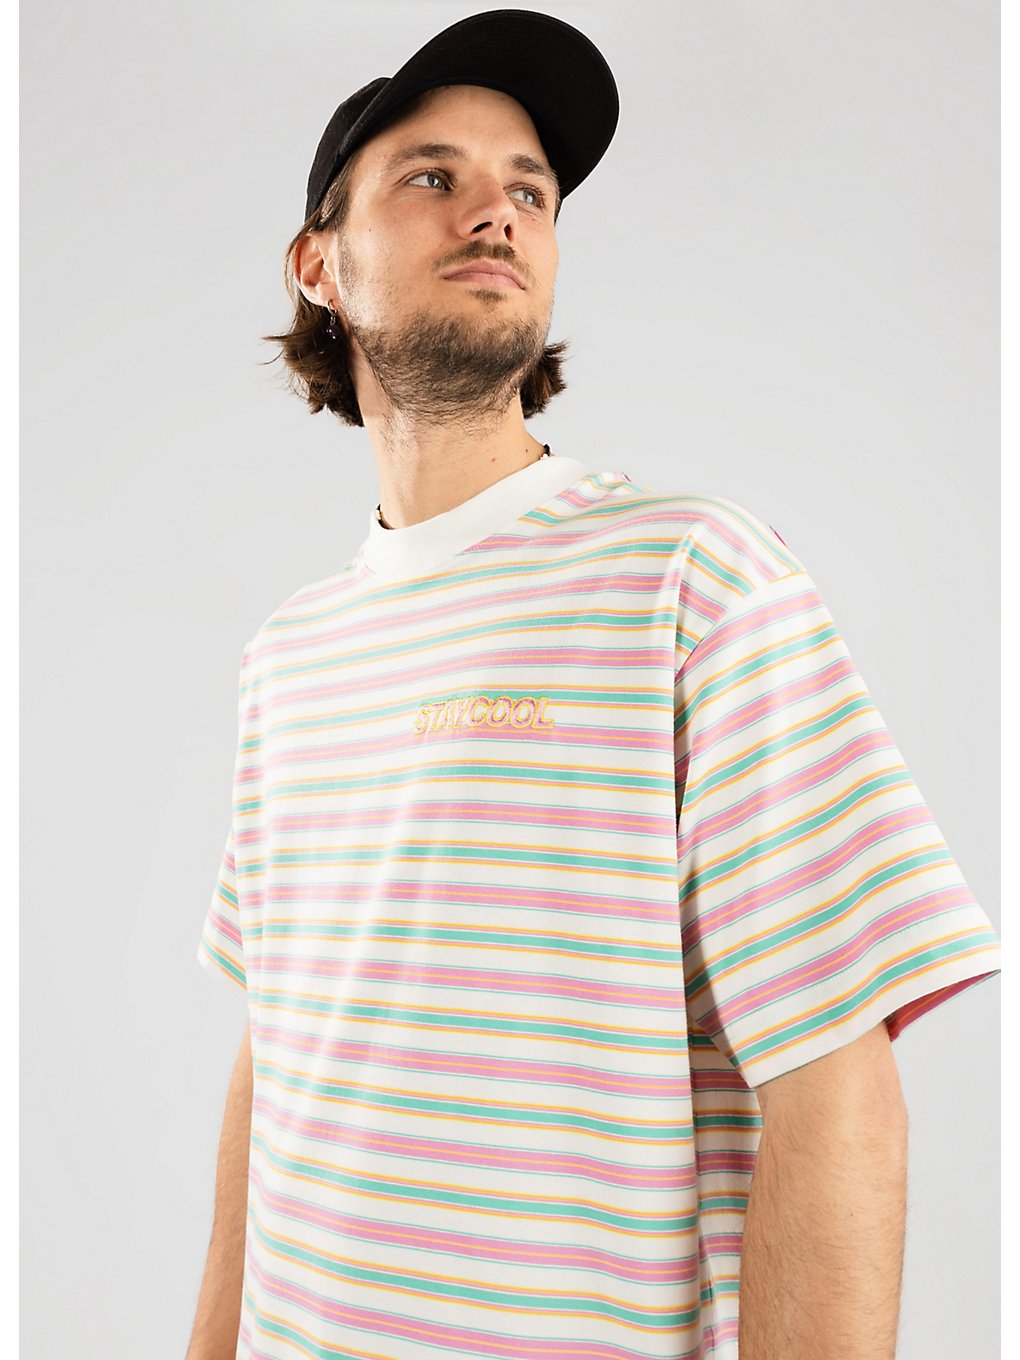 Staycoolnyc Candy Striped T-Shirt multi kaufen